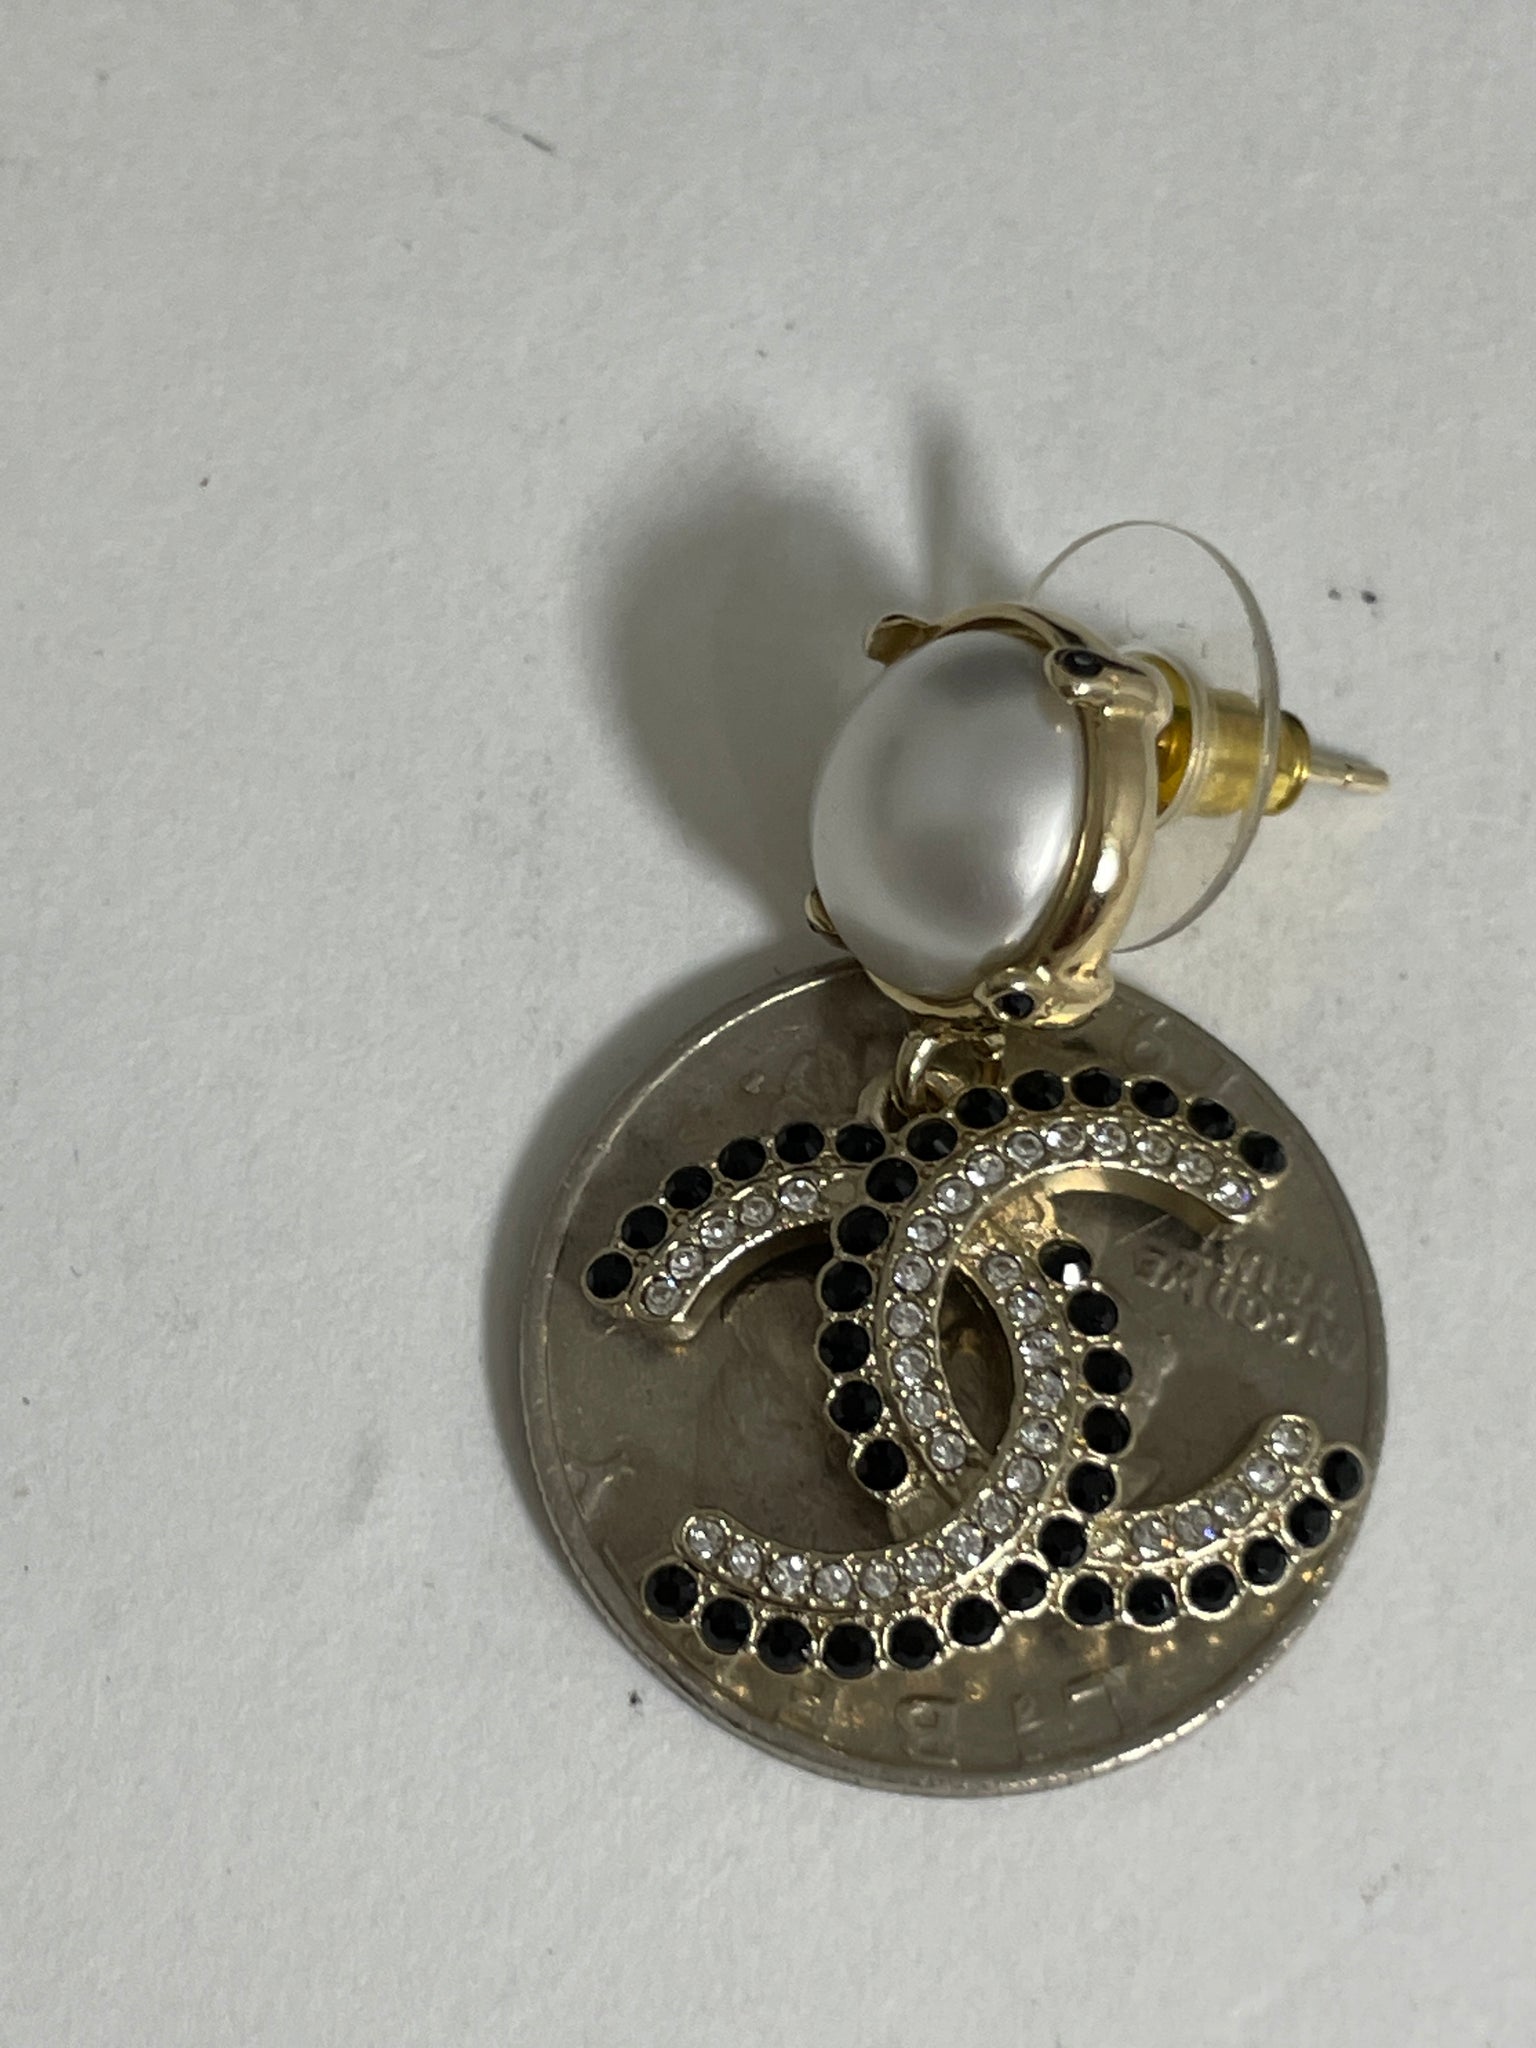 Chanel 22B CC Black/White Crystal Gold Tone Pearl Drop Earrings